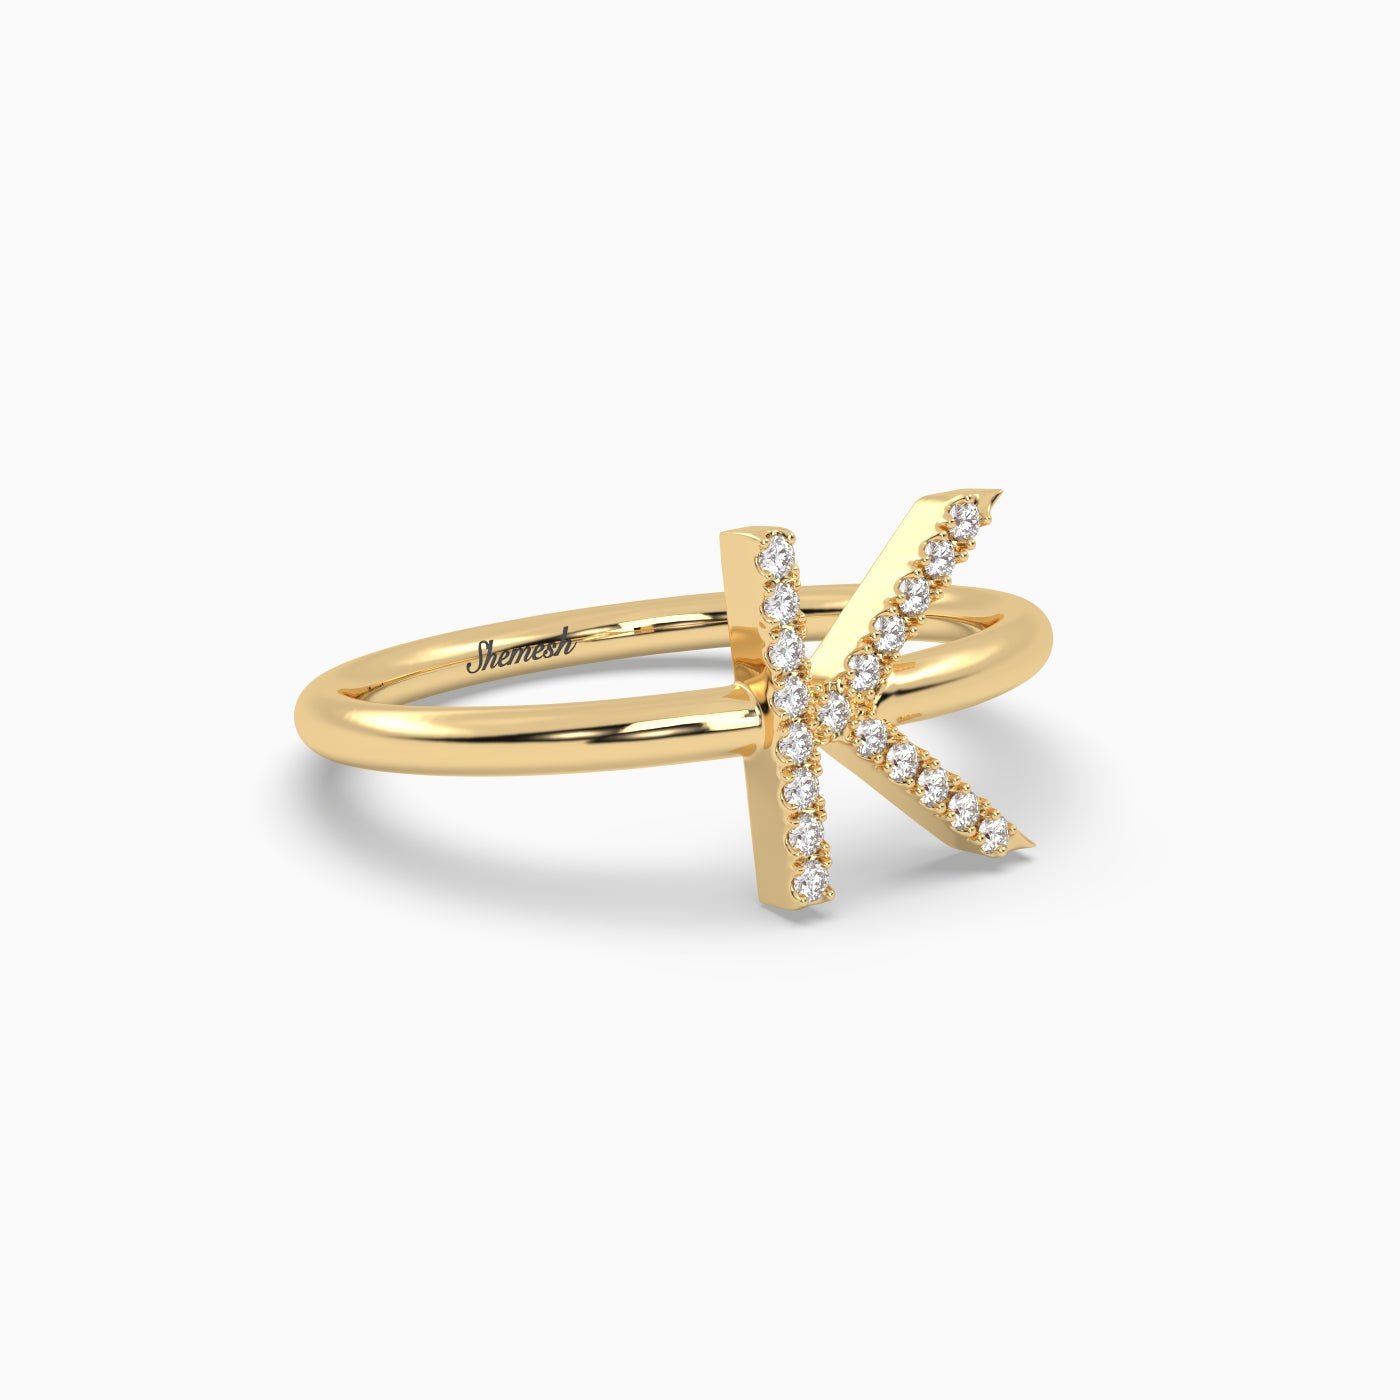 18K Gold "K" Initial Ring - shemesh_diamonds